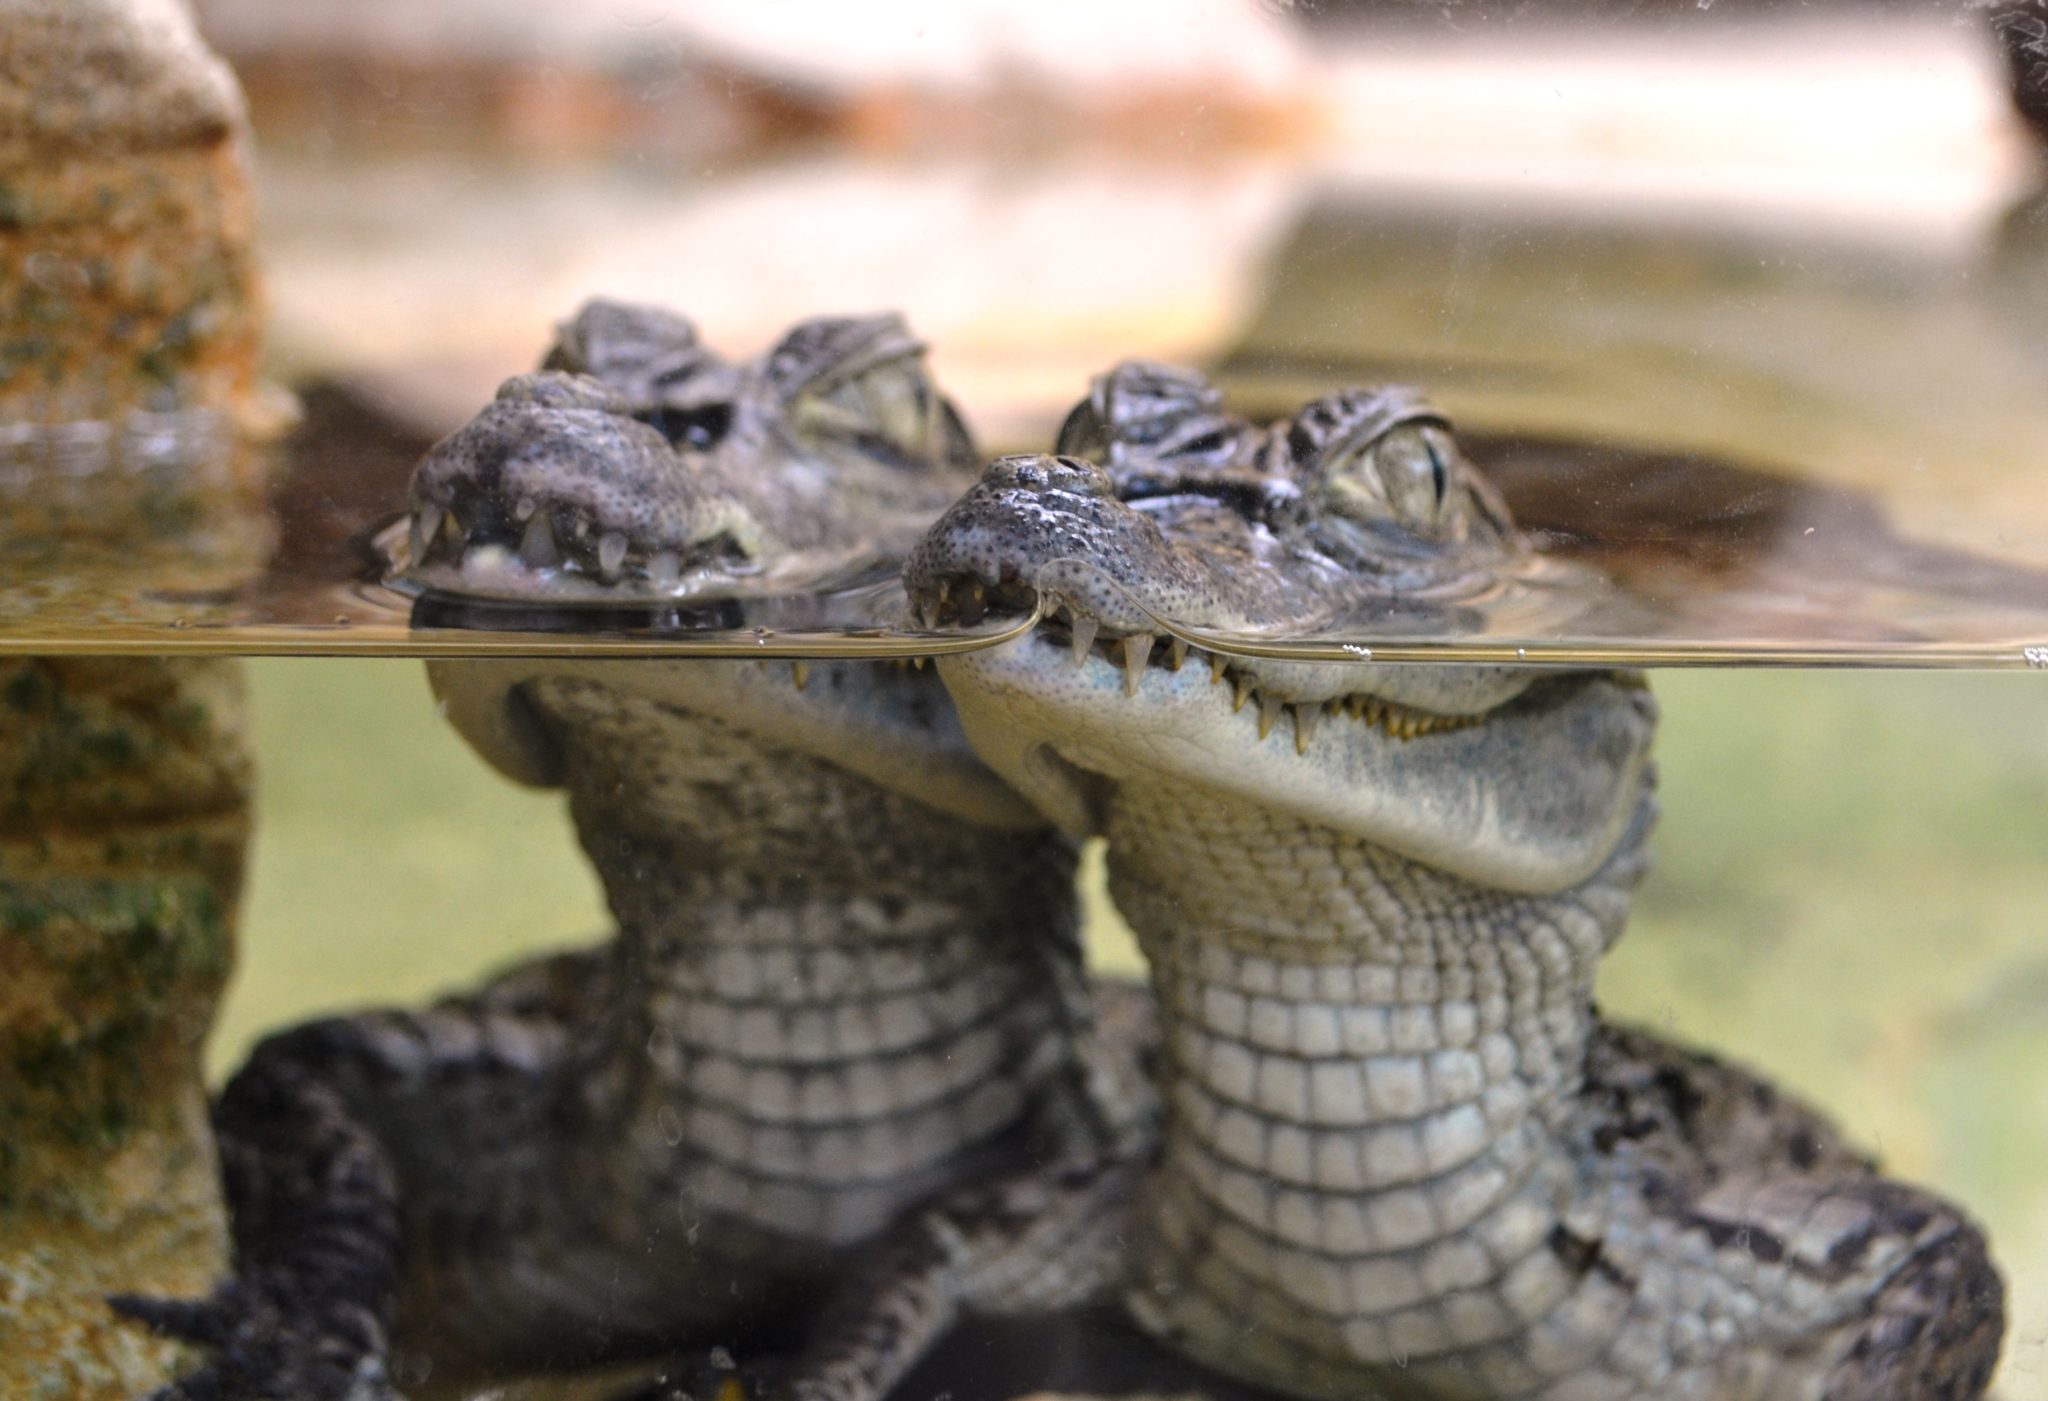 La Ferme aux crocodiles